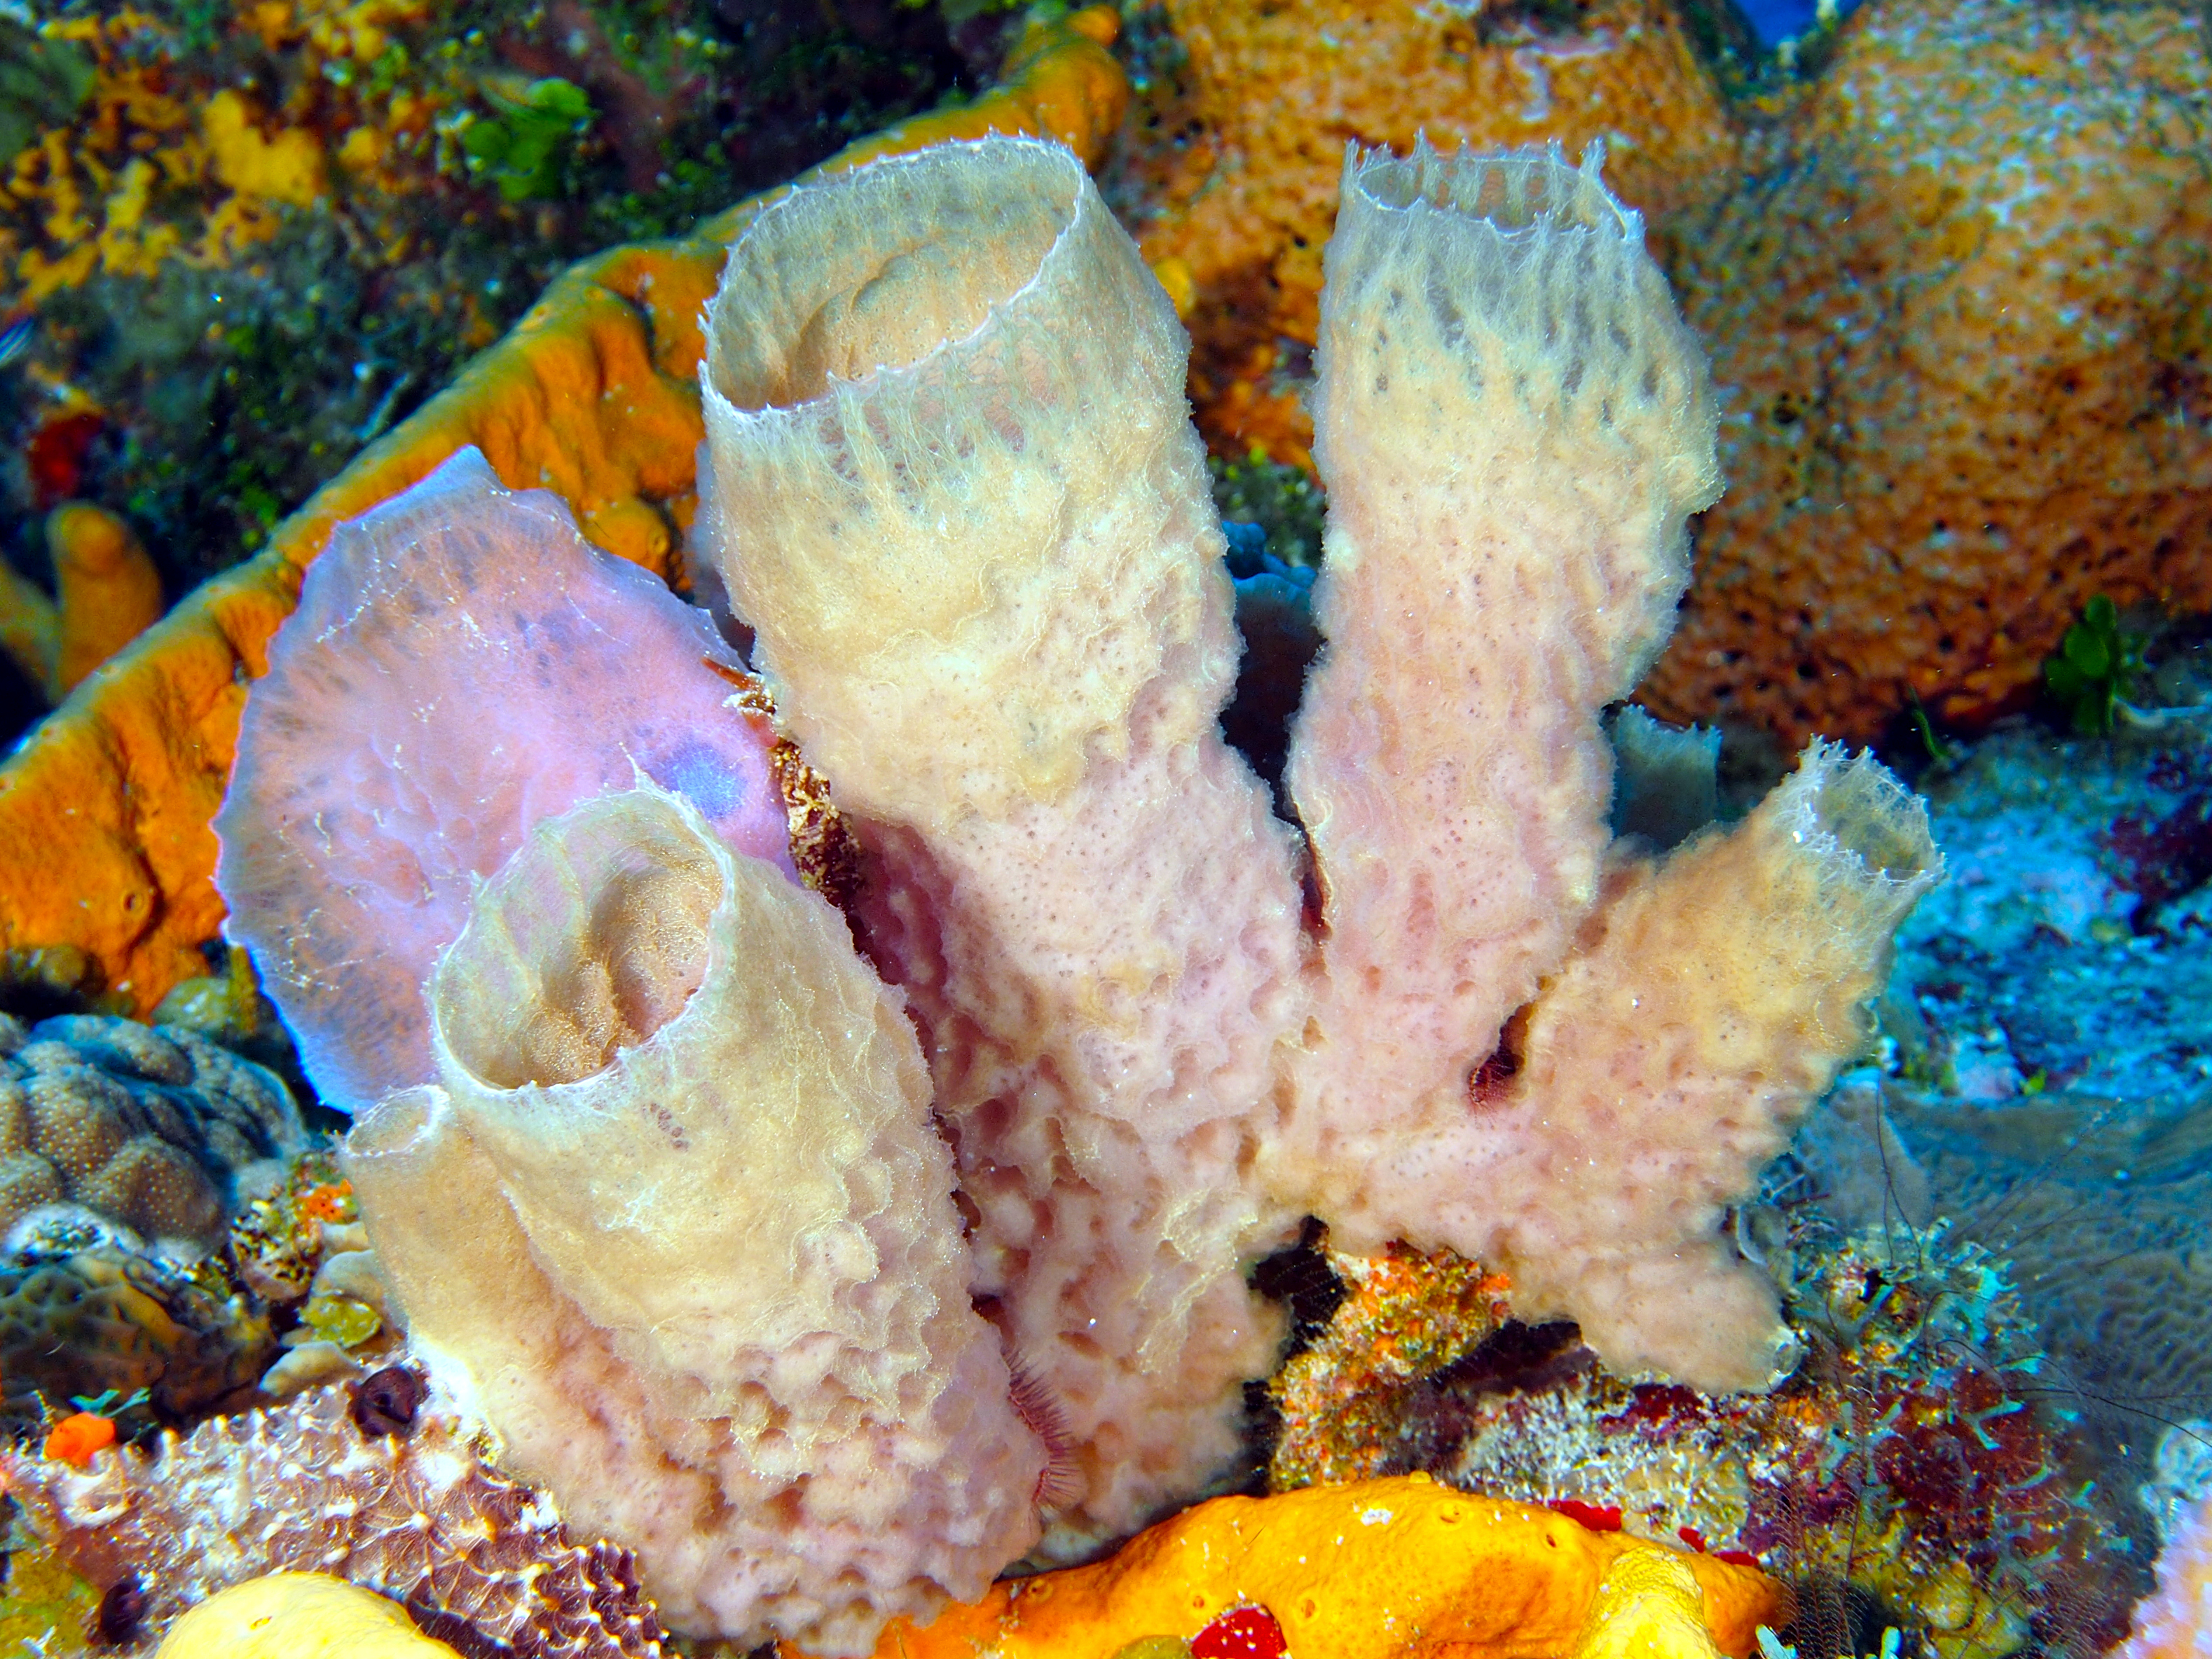 Azure Vase Sponge - Callyspongia plicifera